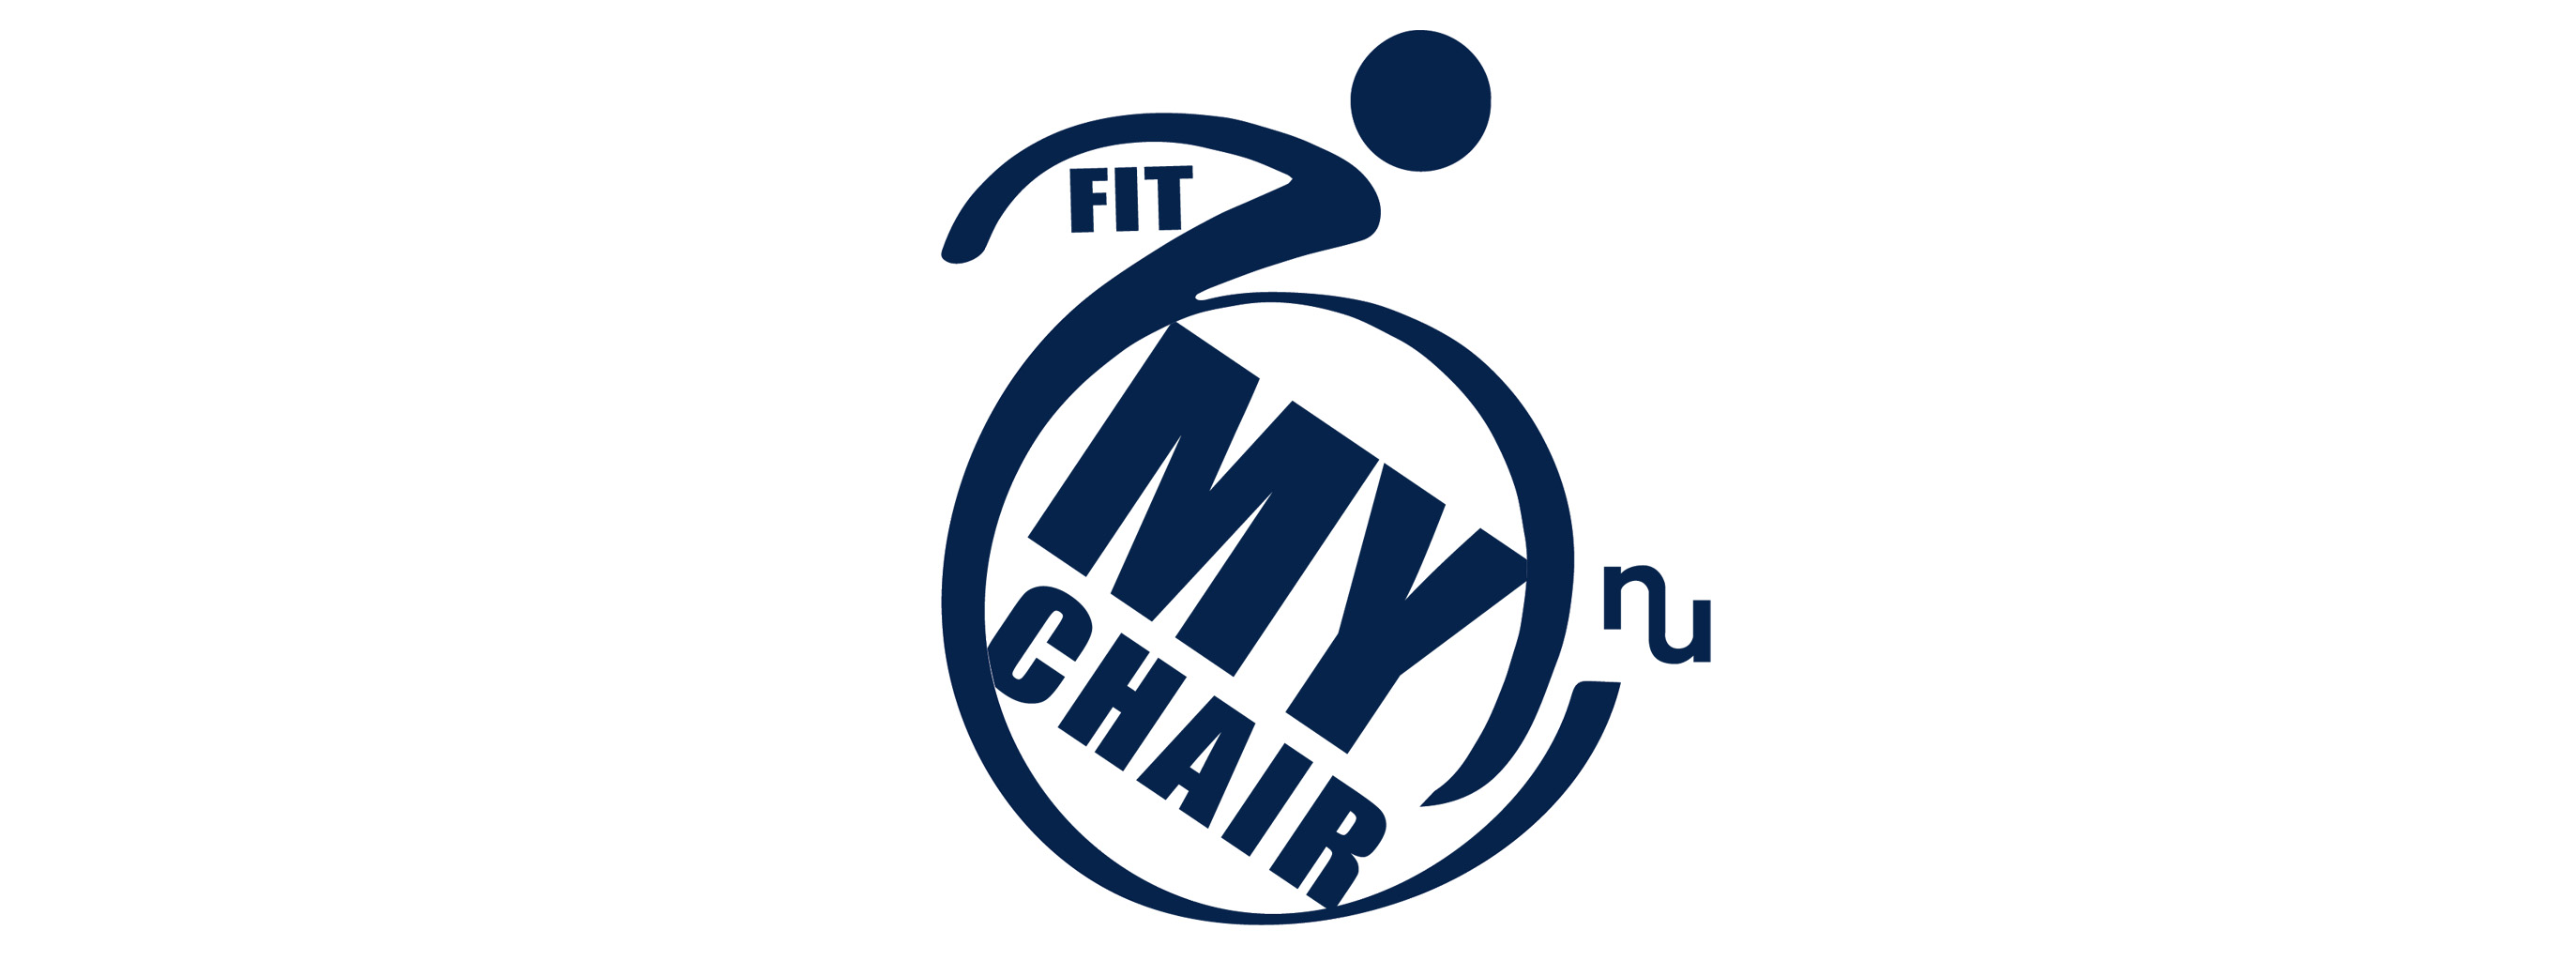 Fit-My-Chair-logo-(1).jpg